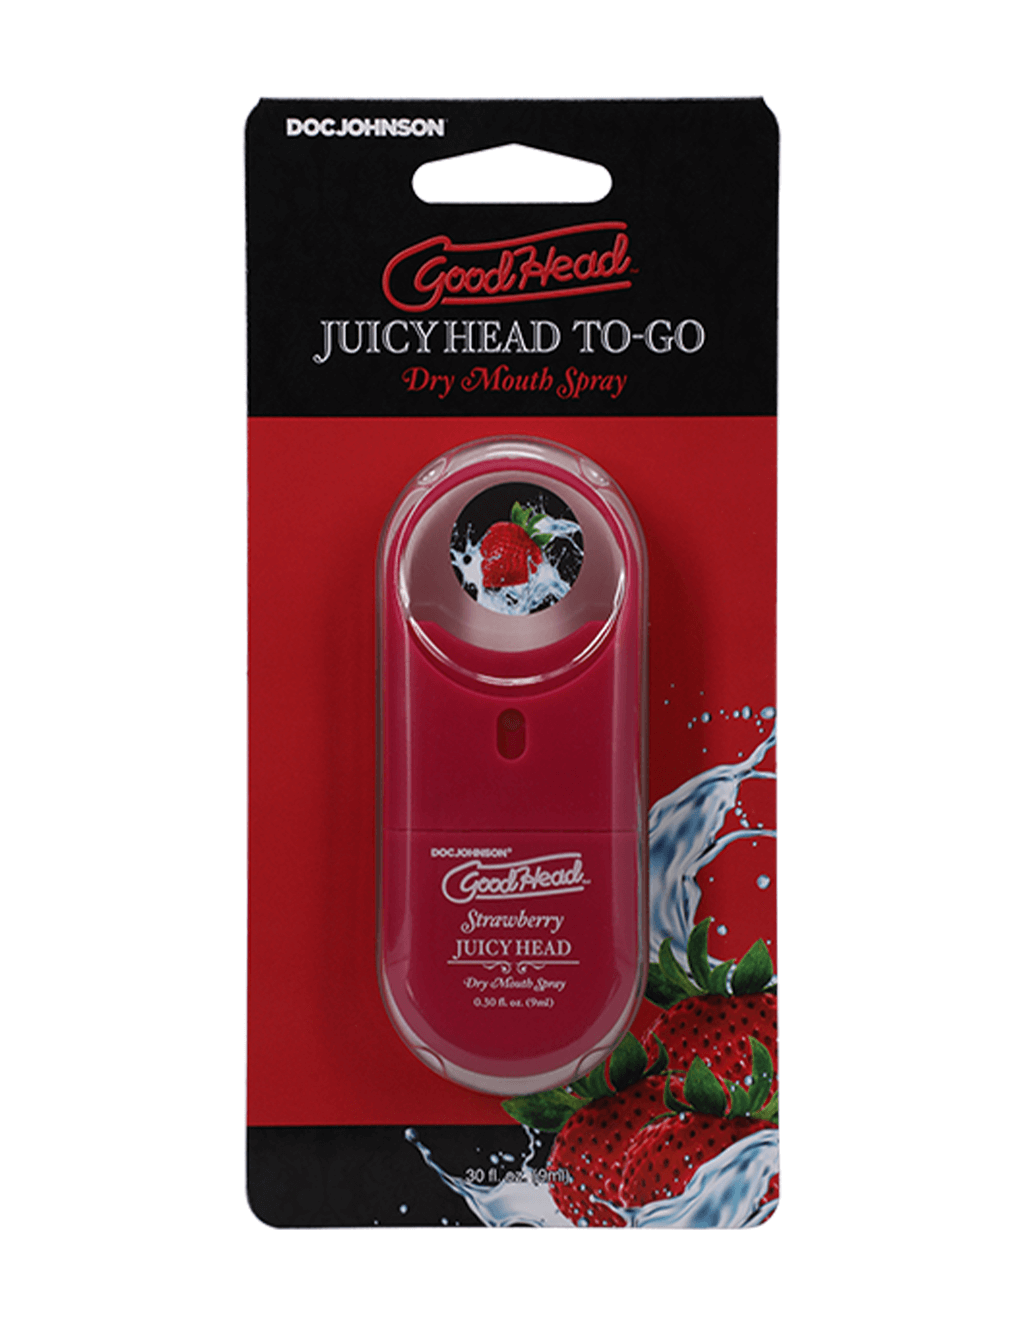 GoodHead Juicy Head To Go - Strawberry Package 